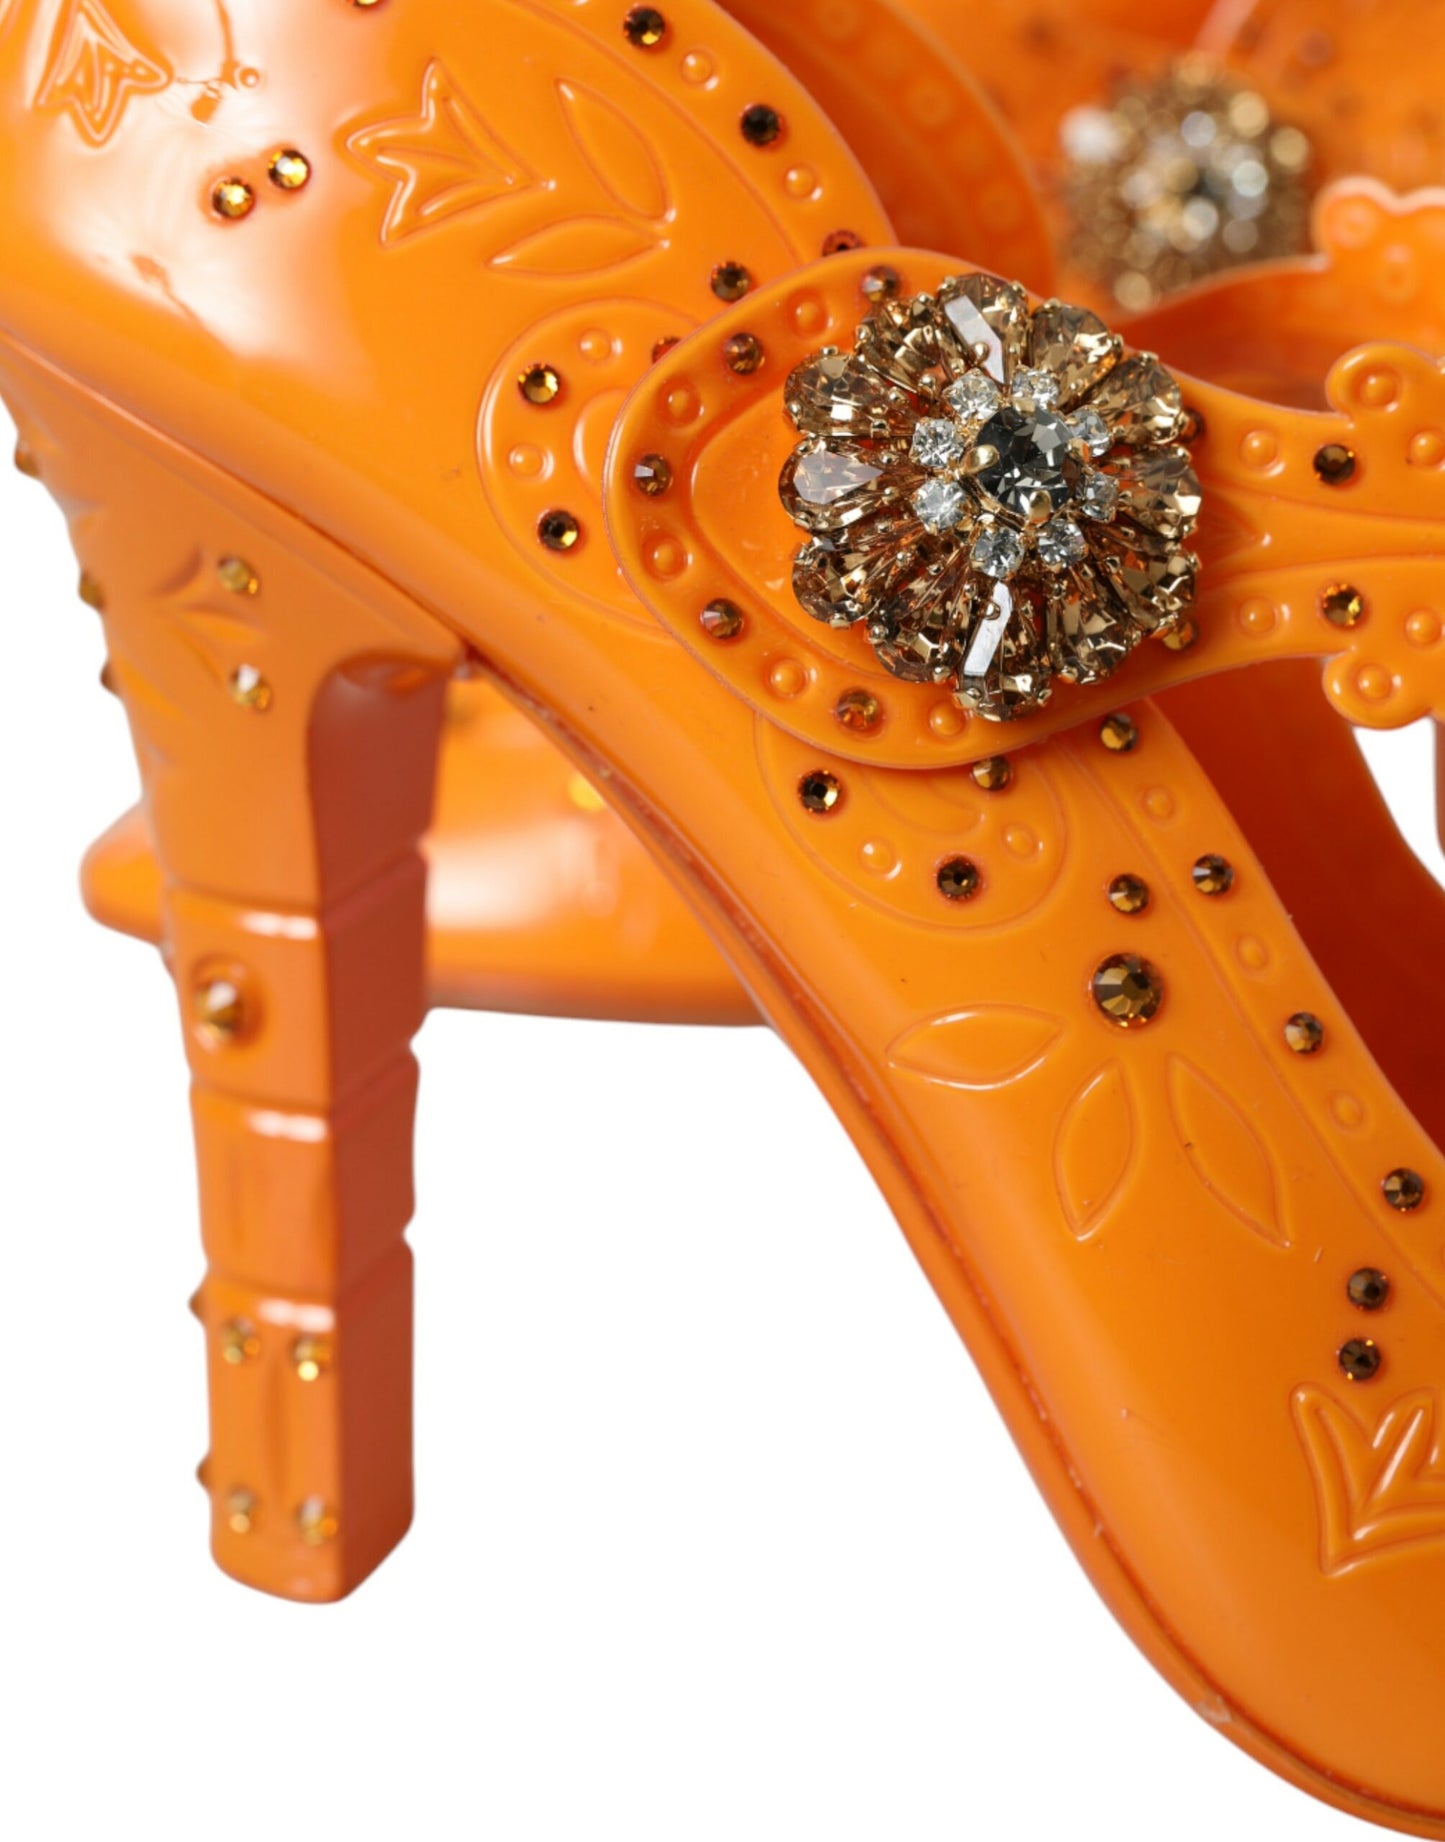 Fashionsarah.com Fashionsarah.com Dolce & Gabbana Orange CINDERELLA Floral Crystal Pumps Shoes